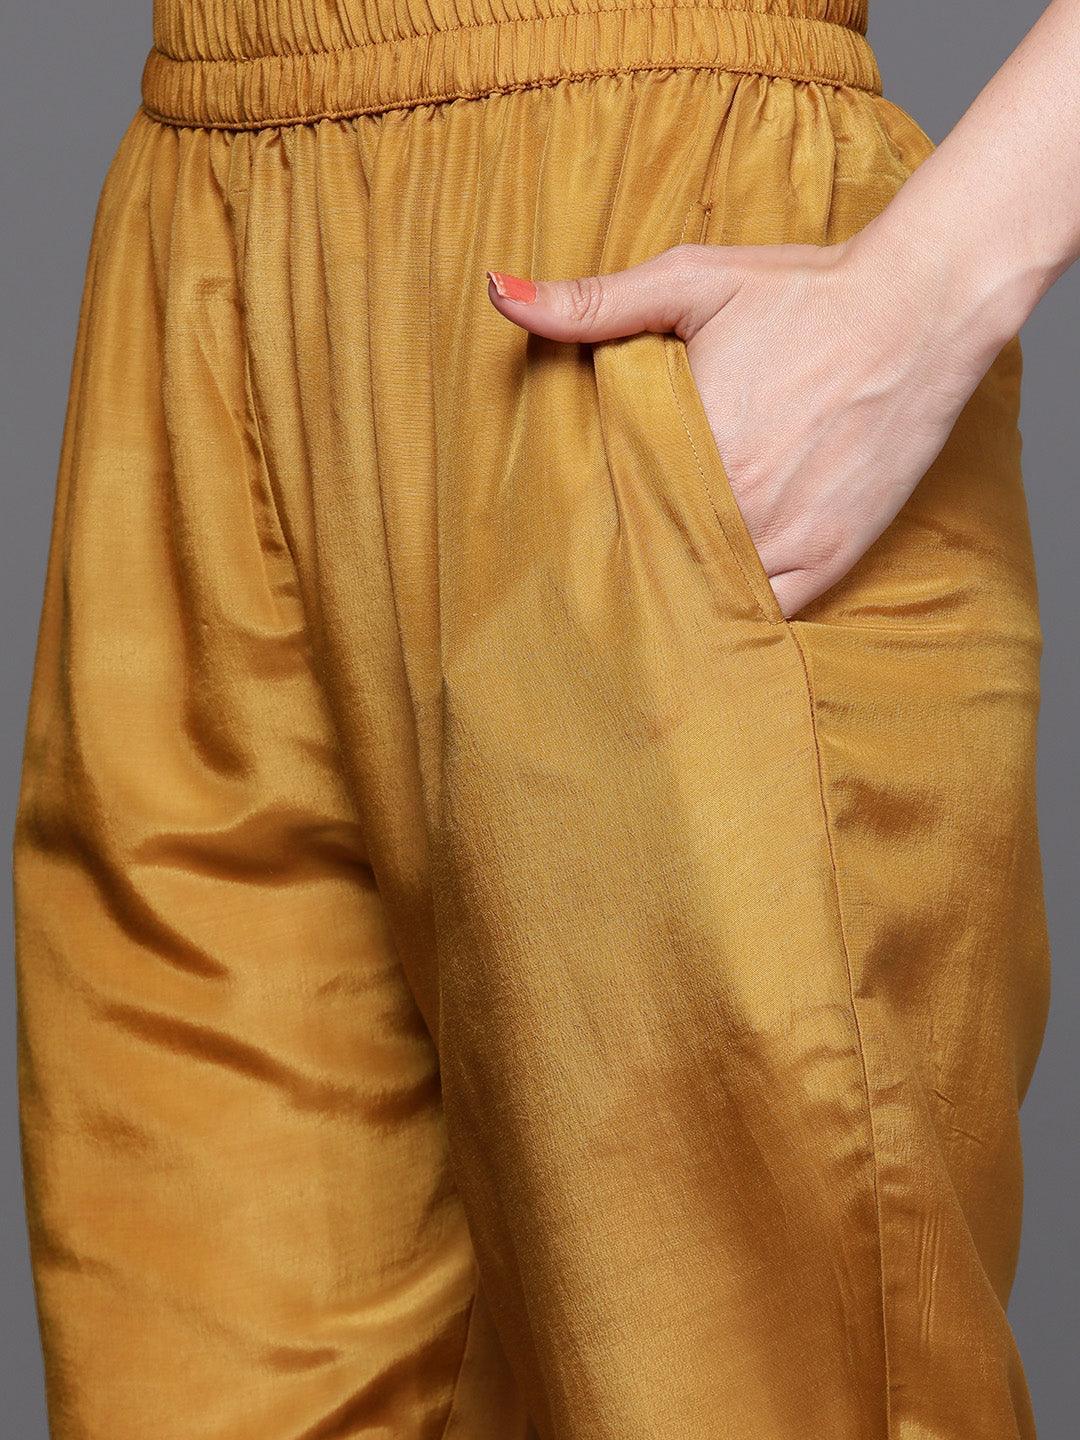 Mustard Self Design Silk Suit Set - ShopLibas